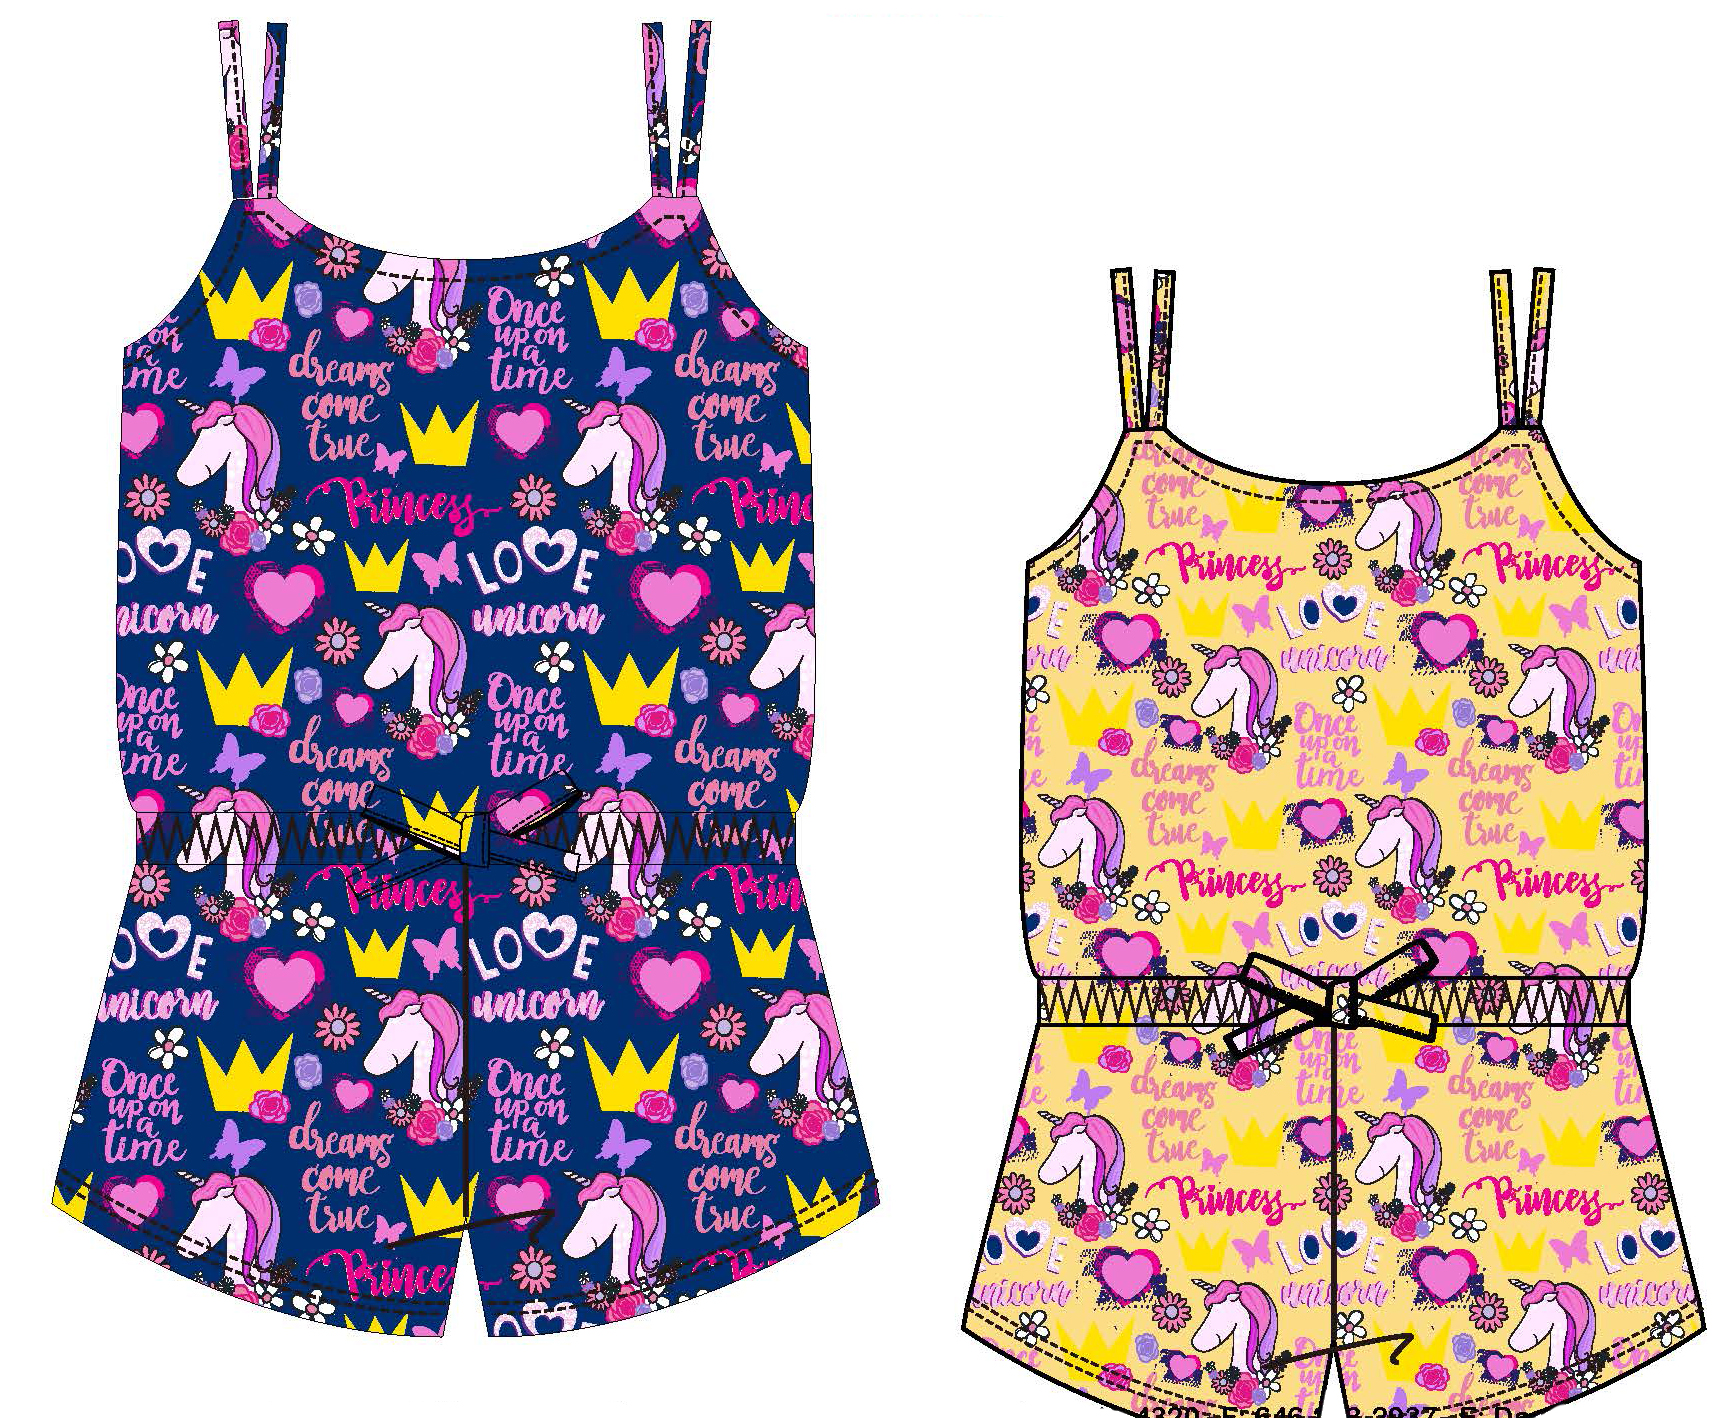 Toddler Girl's Printed Knit Romper DRESS w/ Royal Princess & Unicorn Print - Size 2T-4T